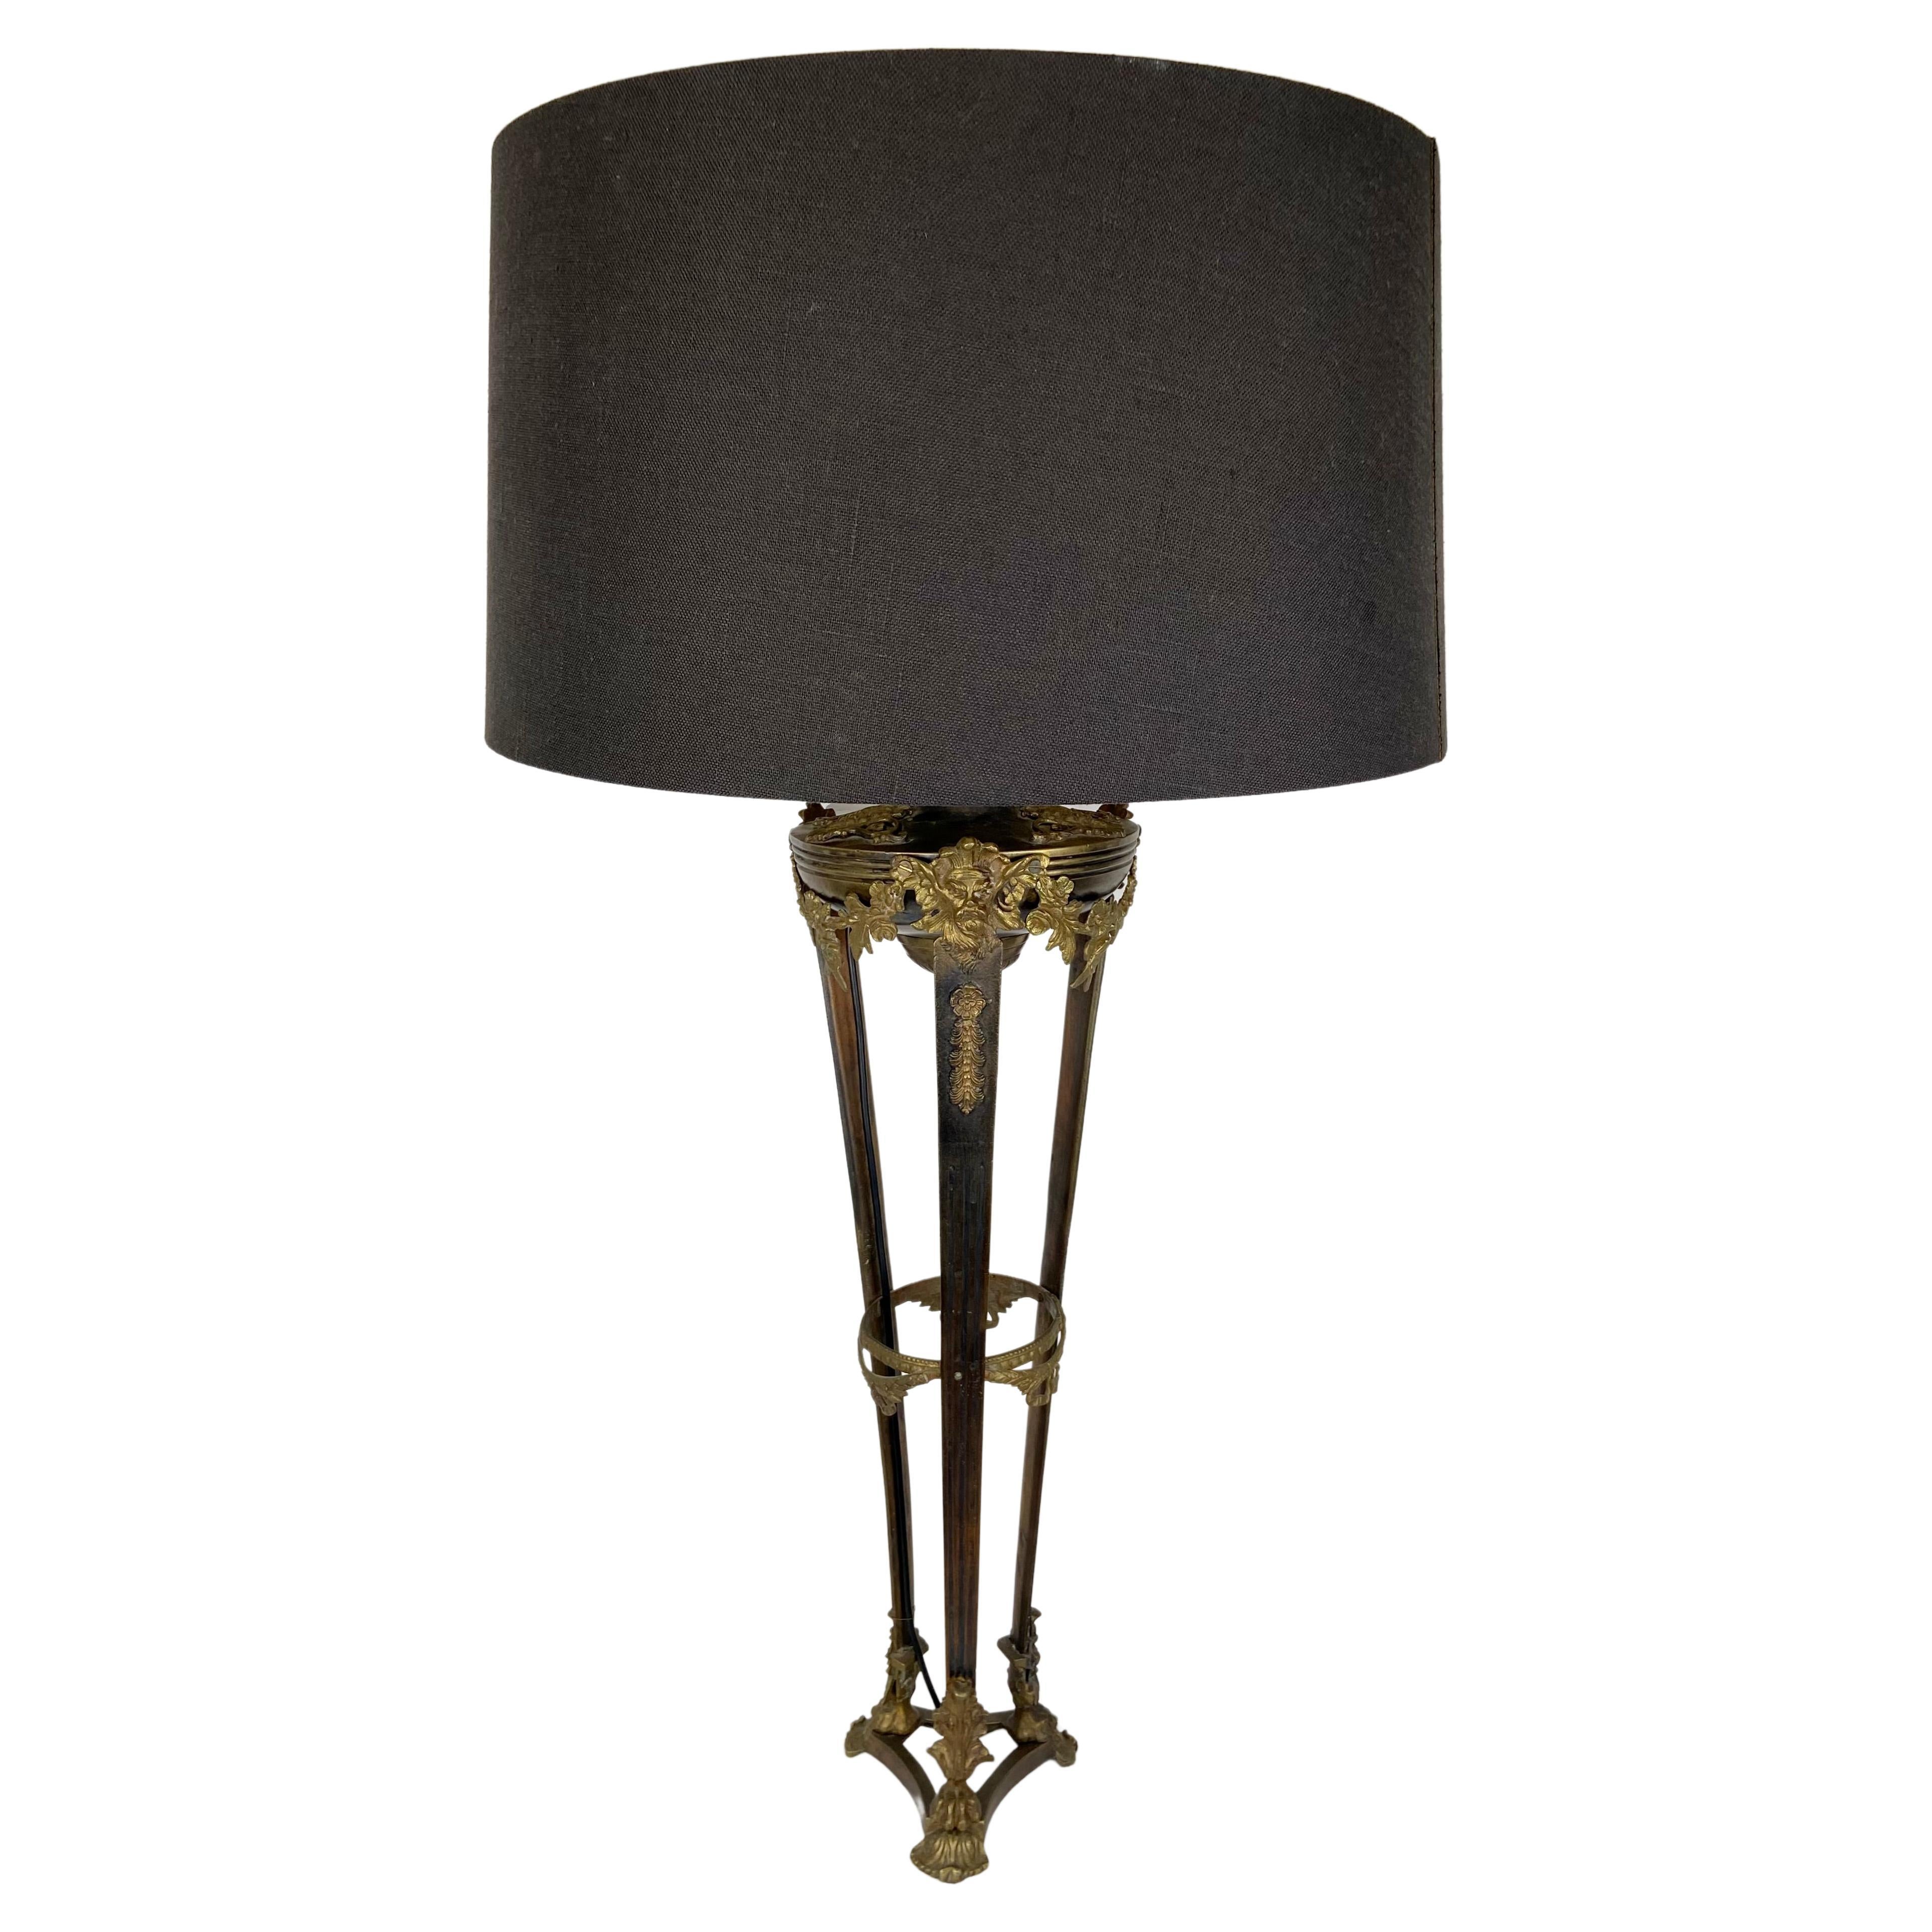 Italian table lamp. For Sale